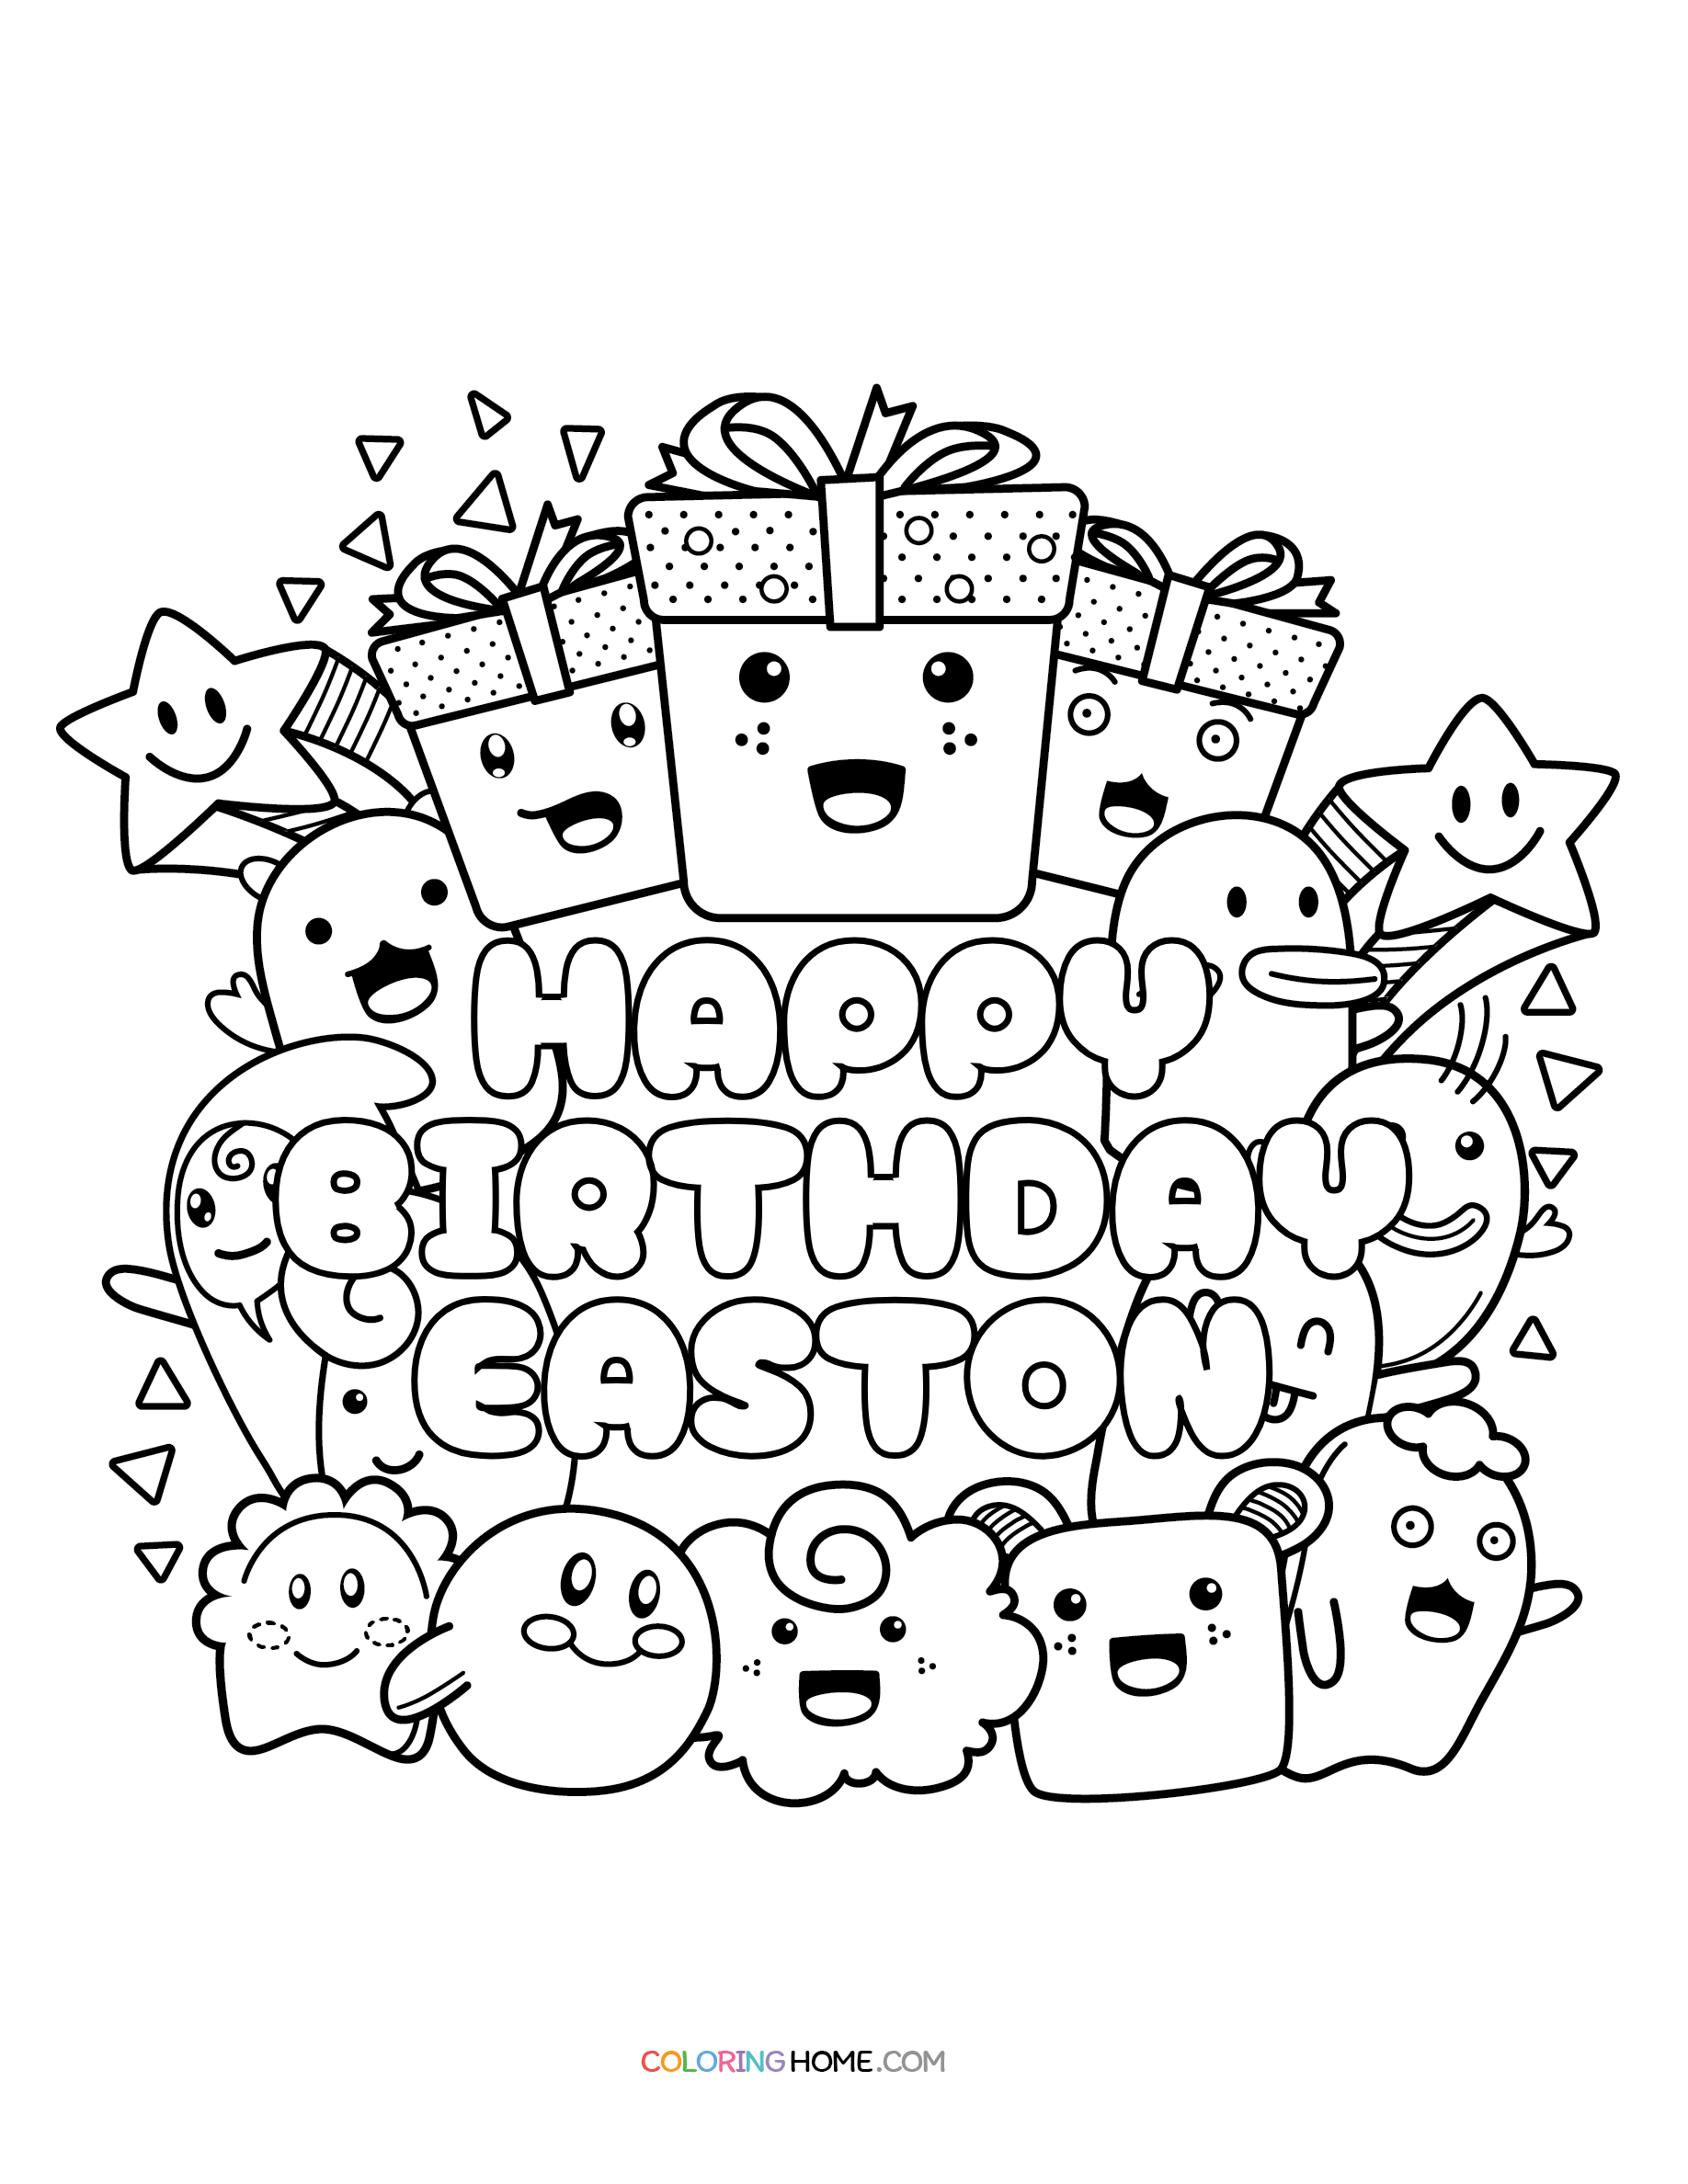 Happy Birthday Easton coloring page